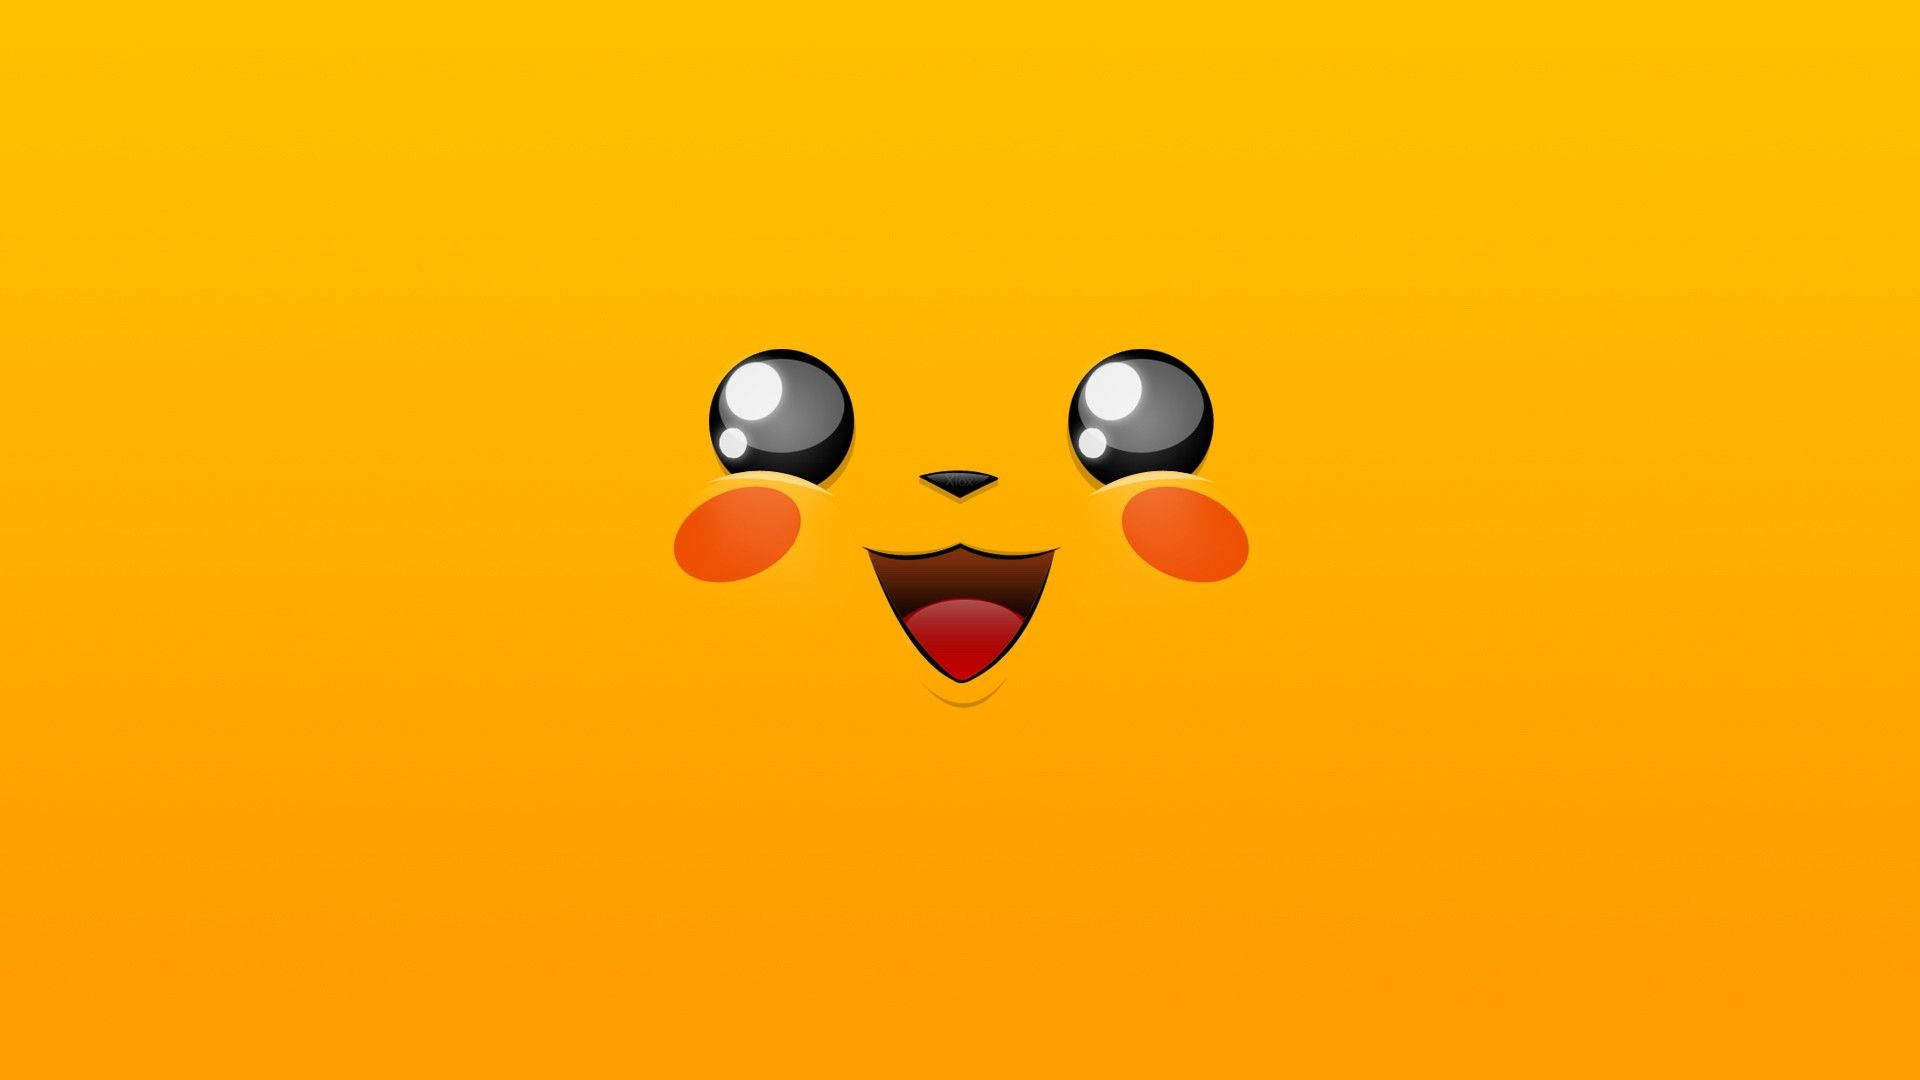 Pikachu 3d Pokémon With Goggly Eyes Background